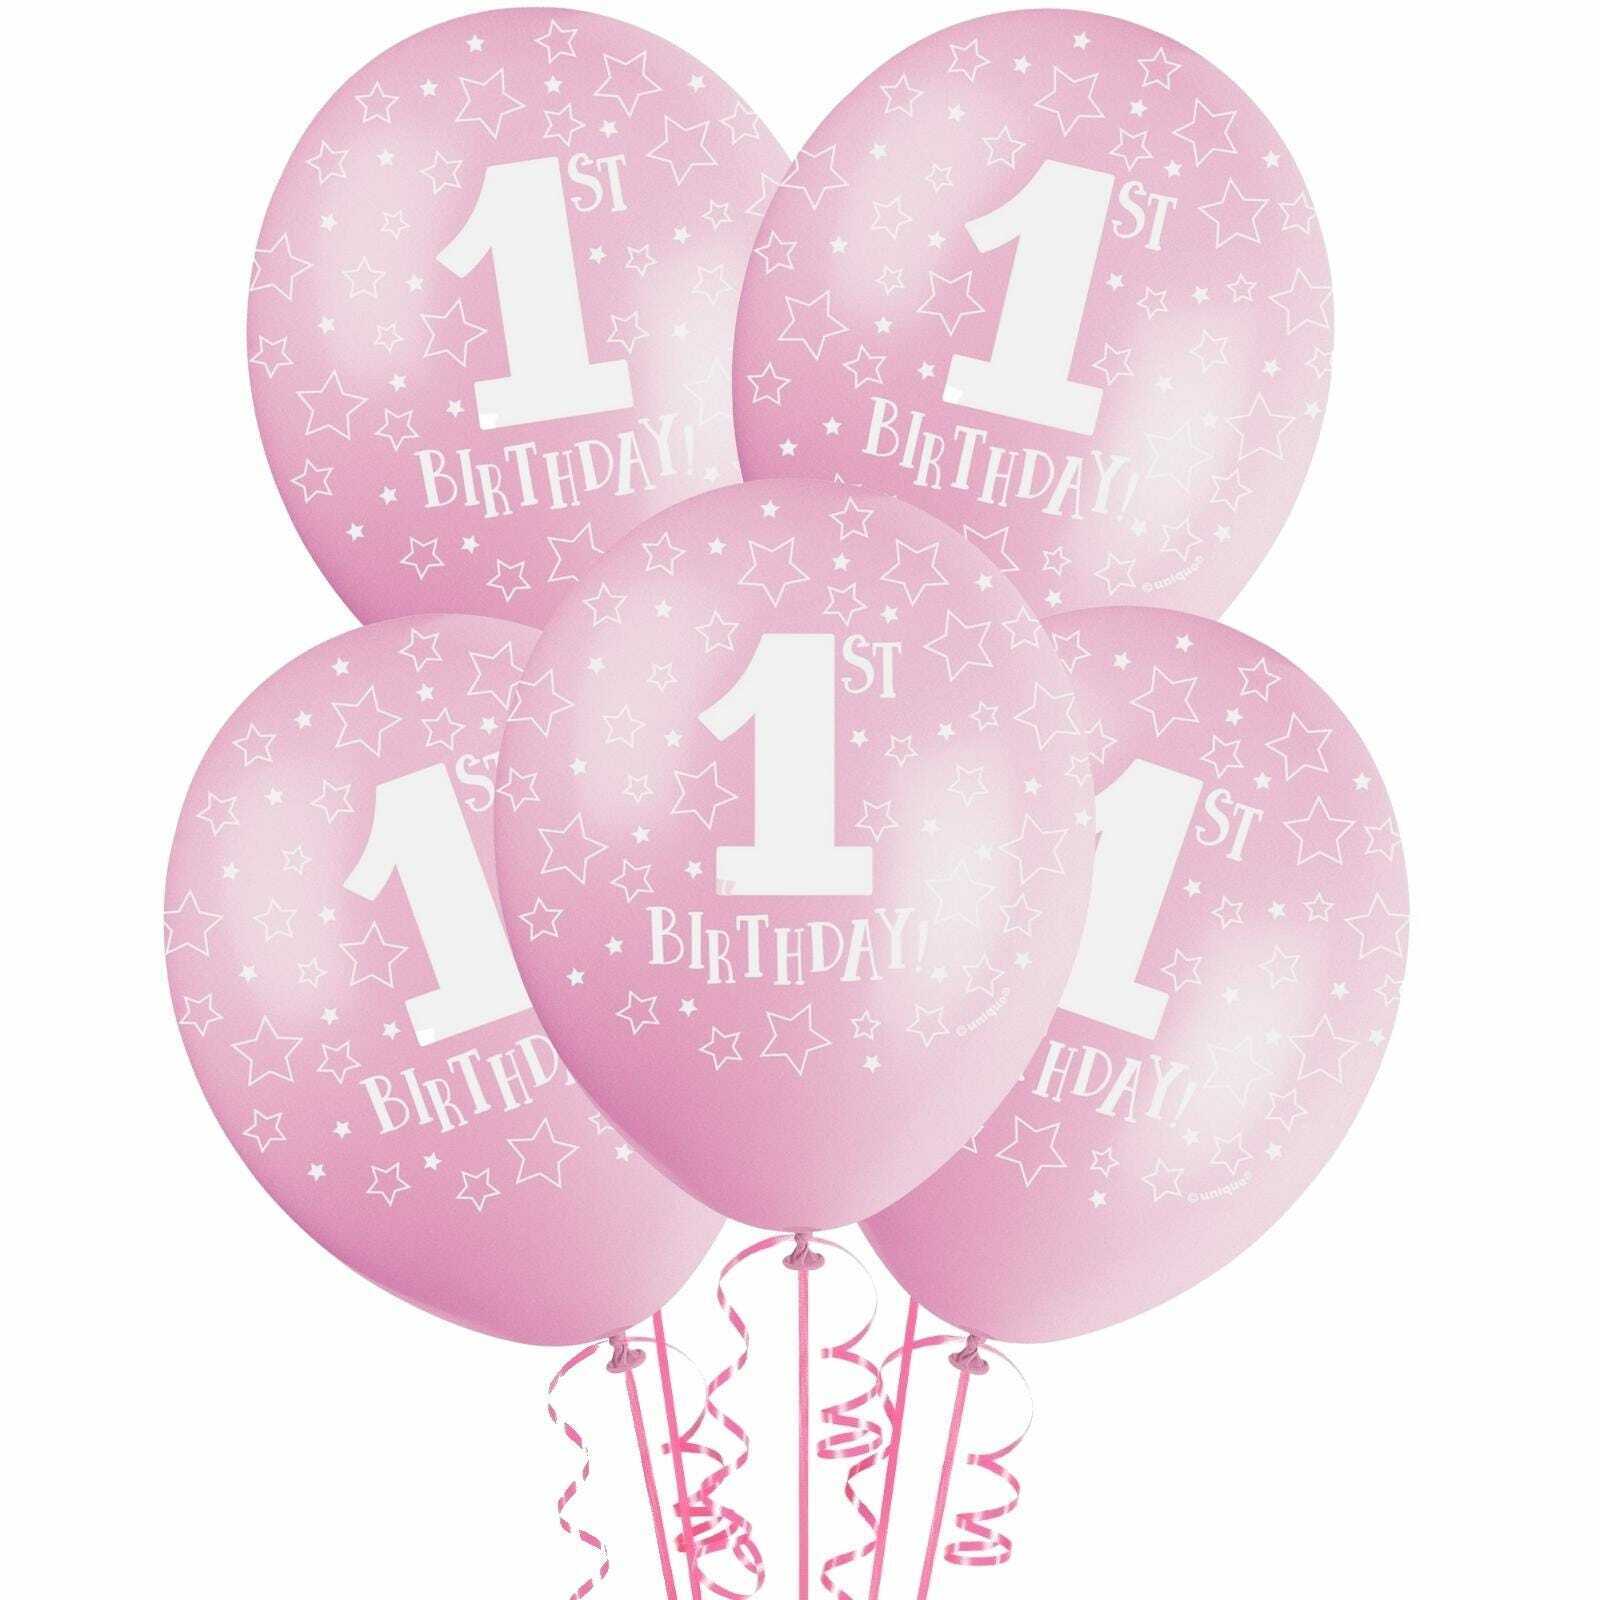 1st Birthday - Pink Latex